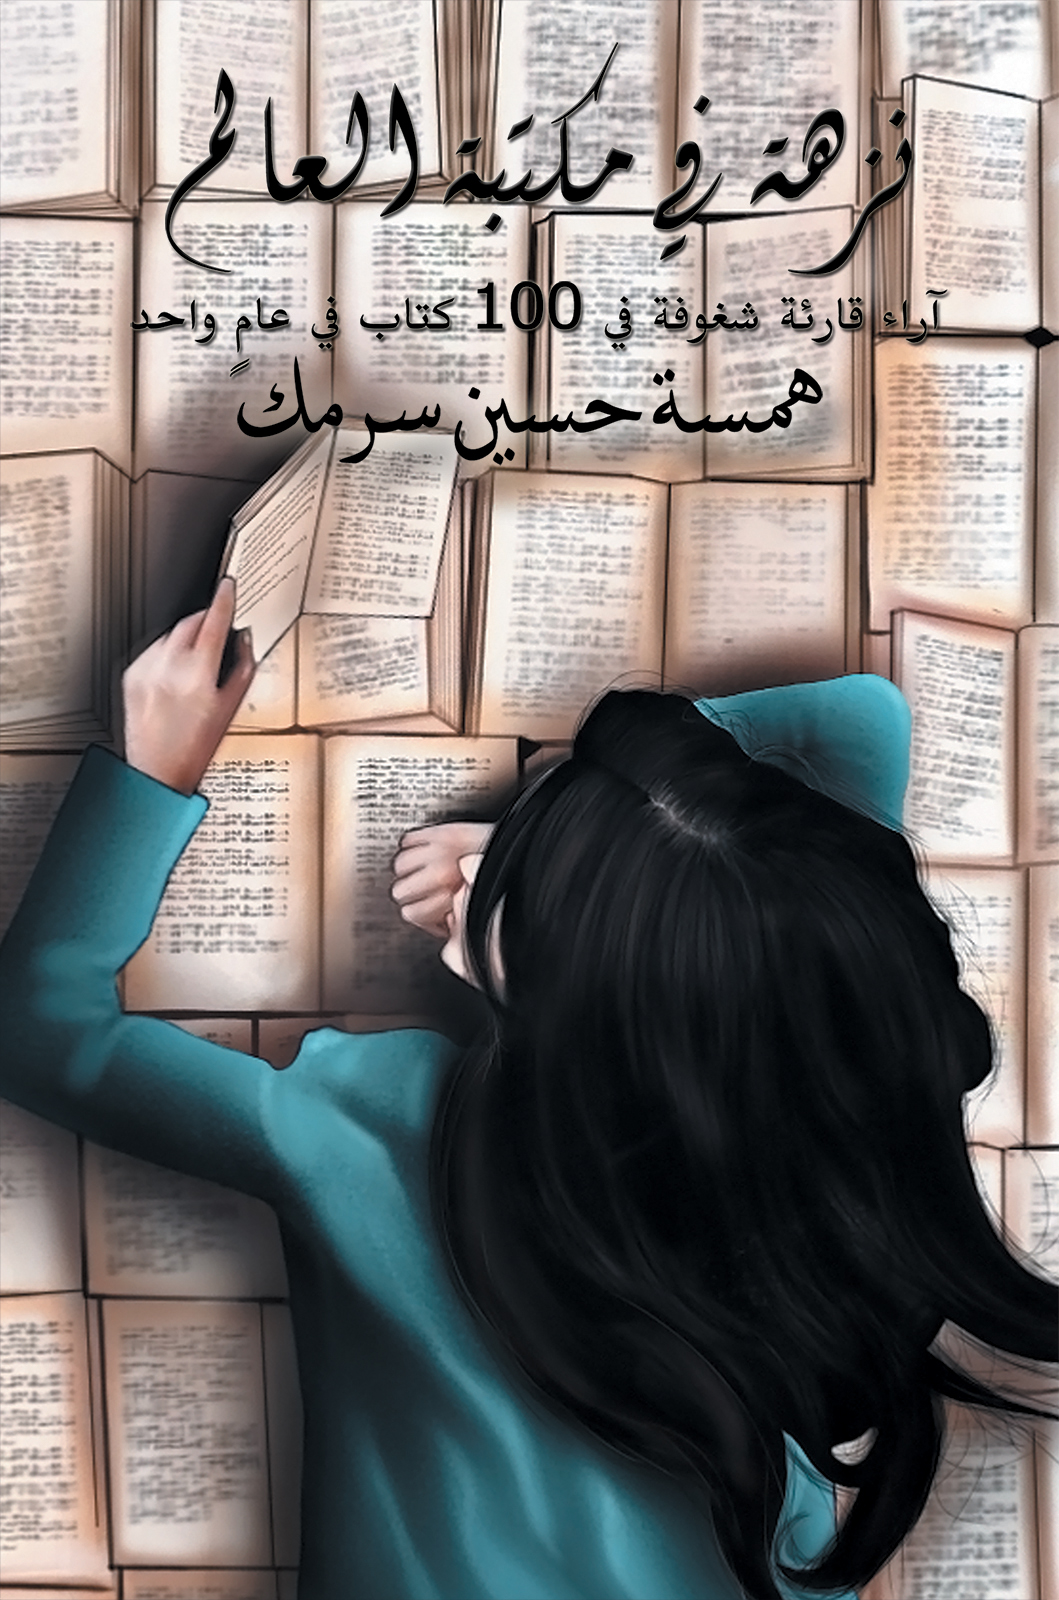 This image is the cover for the book نزهة في مكتبة العالم